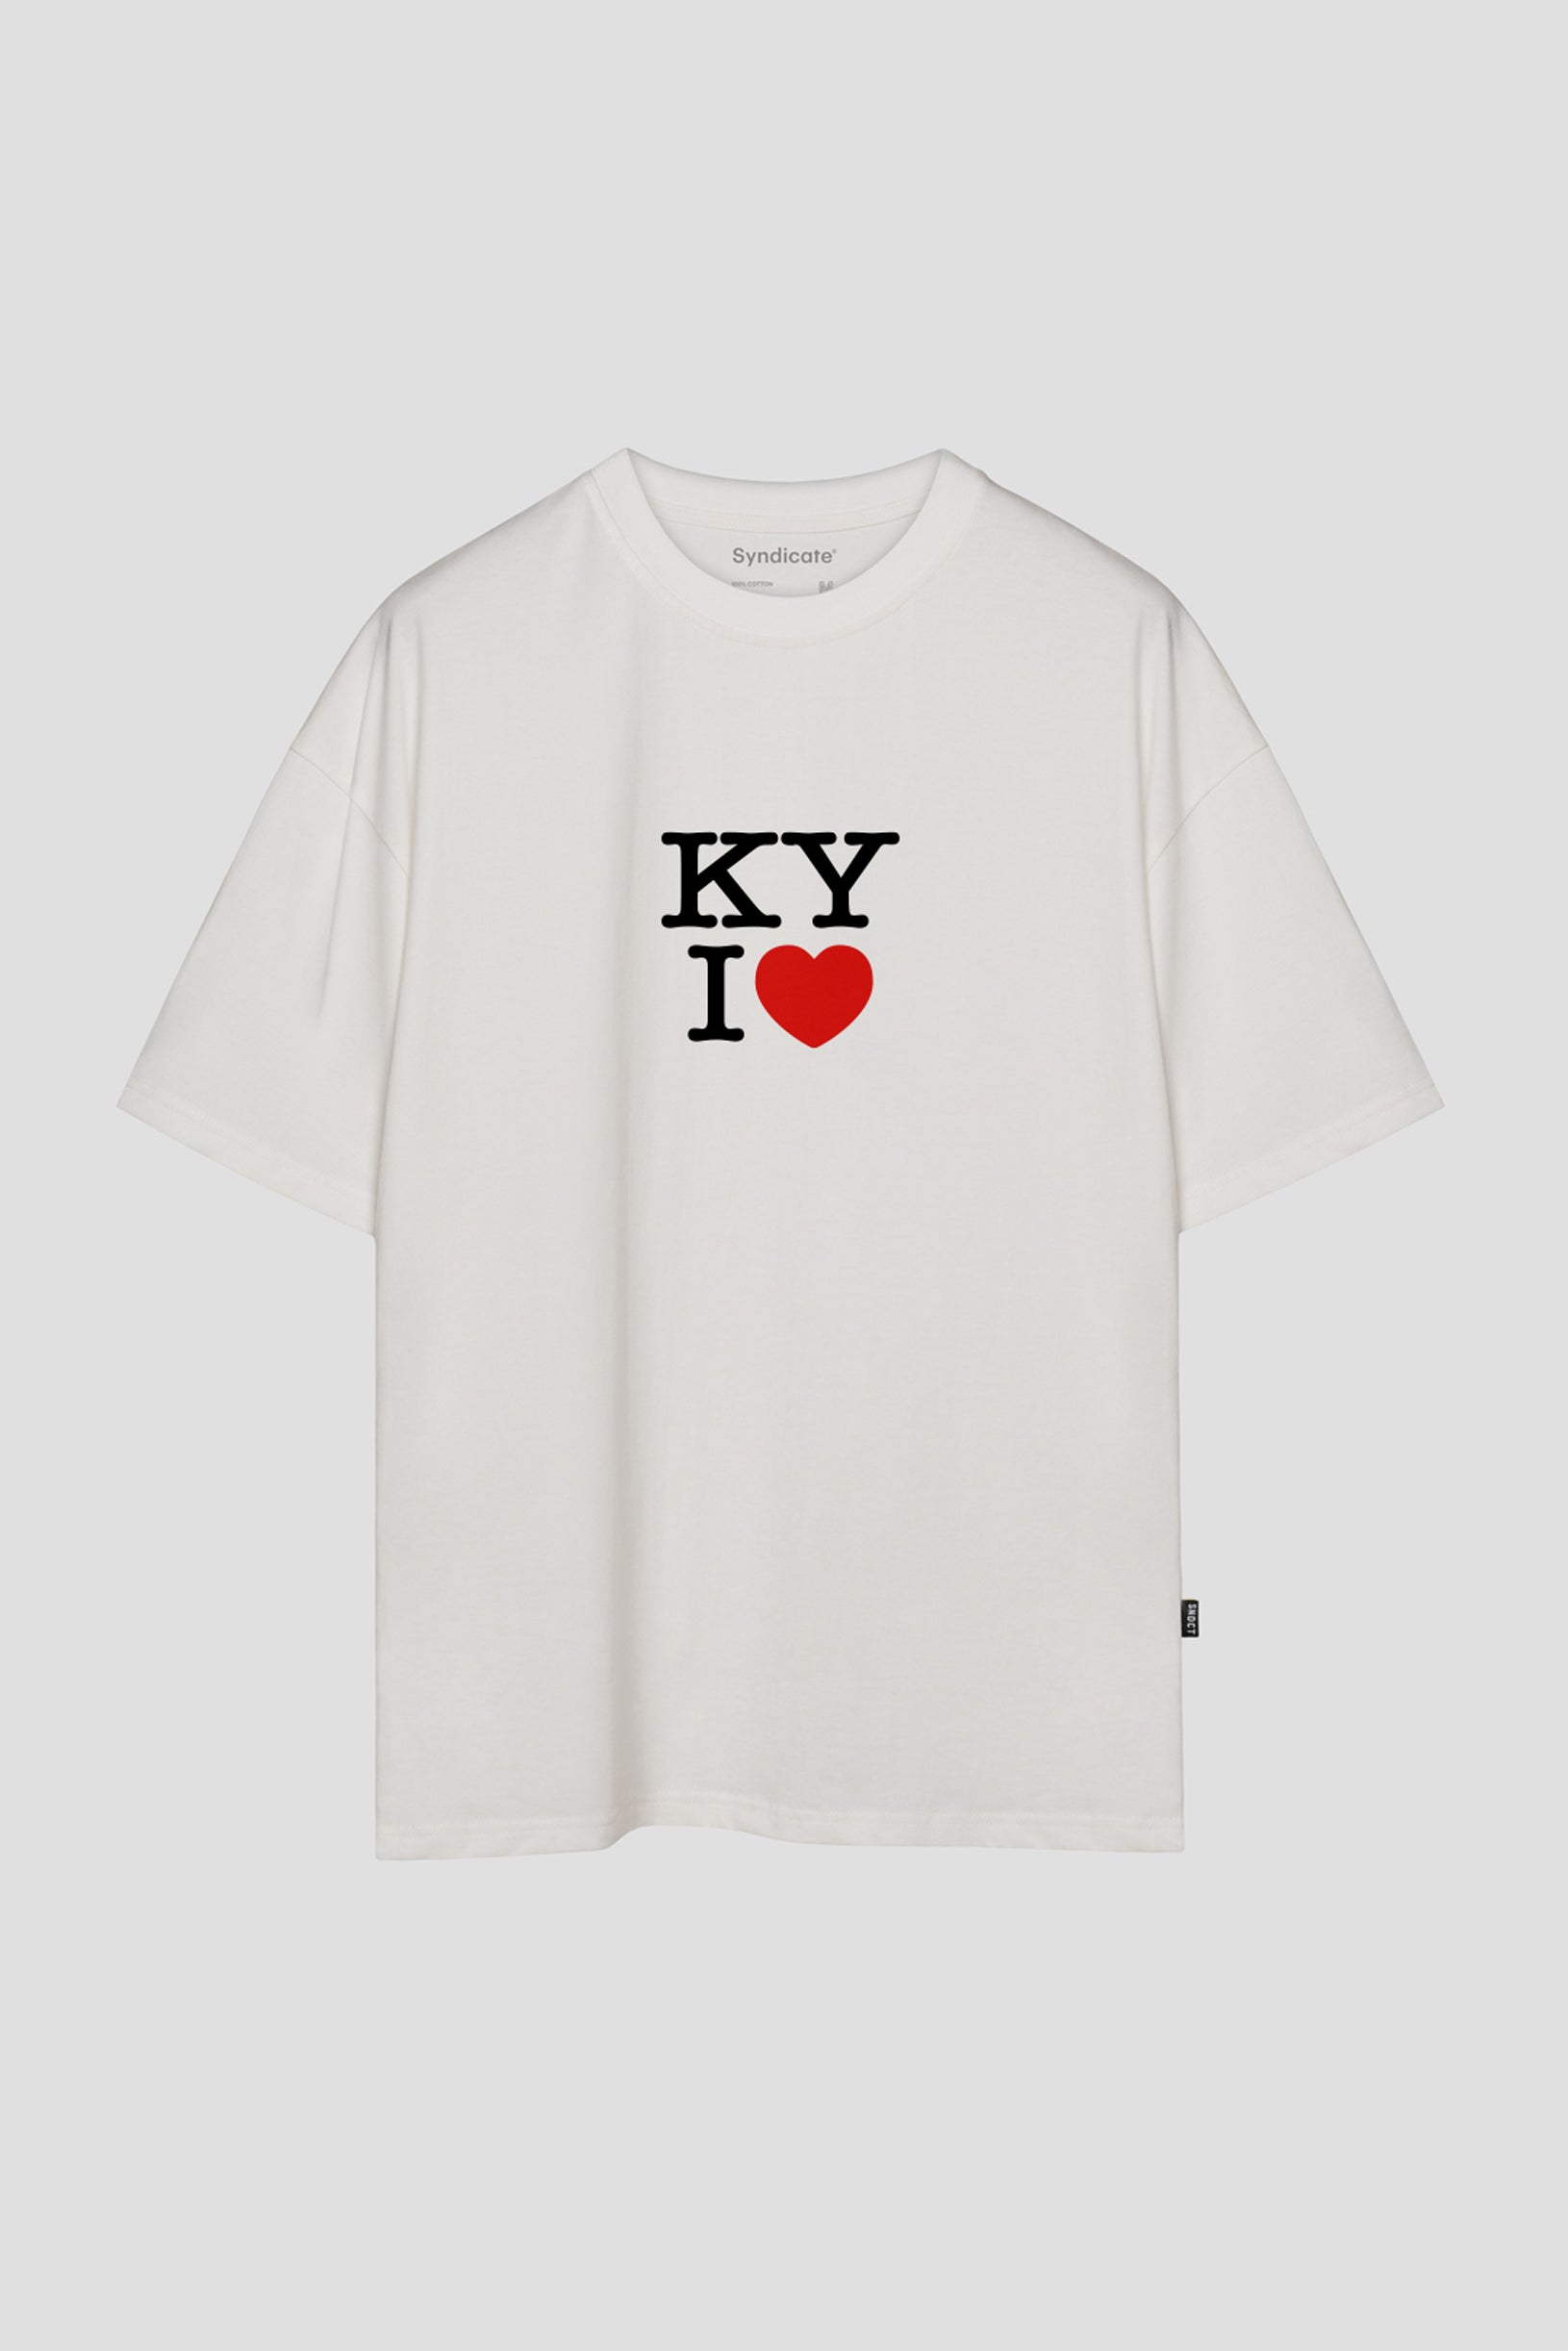 SNDCT X Vova Vorotniov KYI<3 Oversize T-shirt